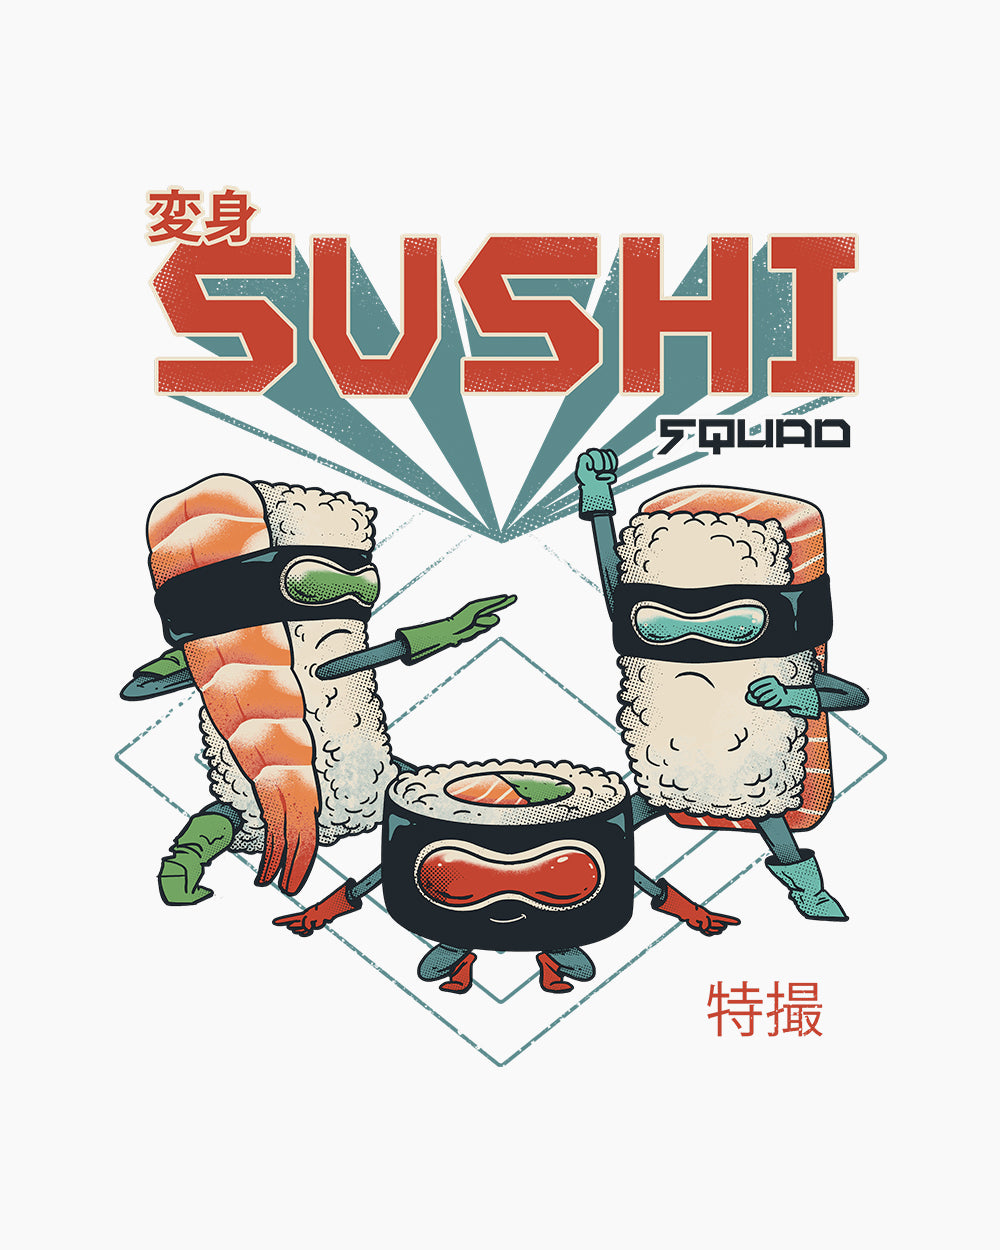 Sushi Squad Long Sleeve Australia Online #colour_white